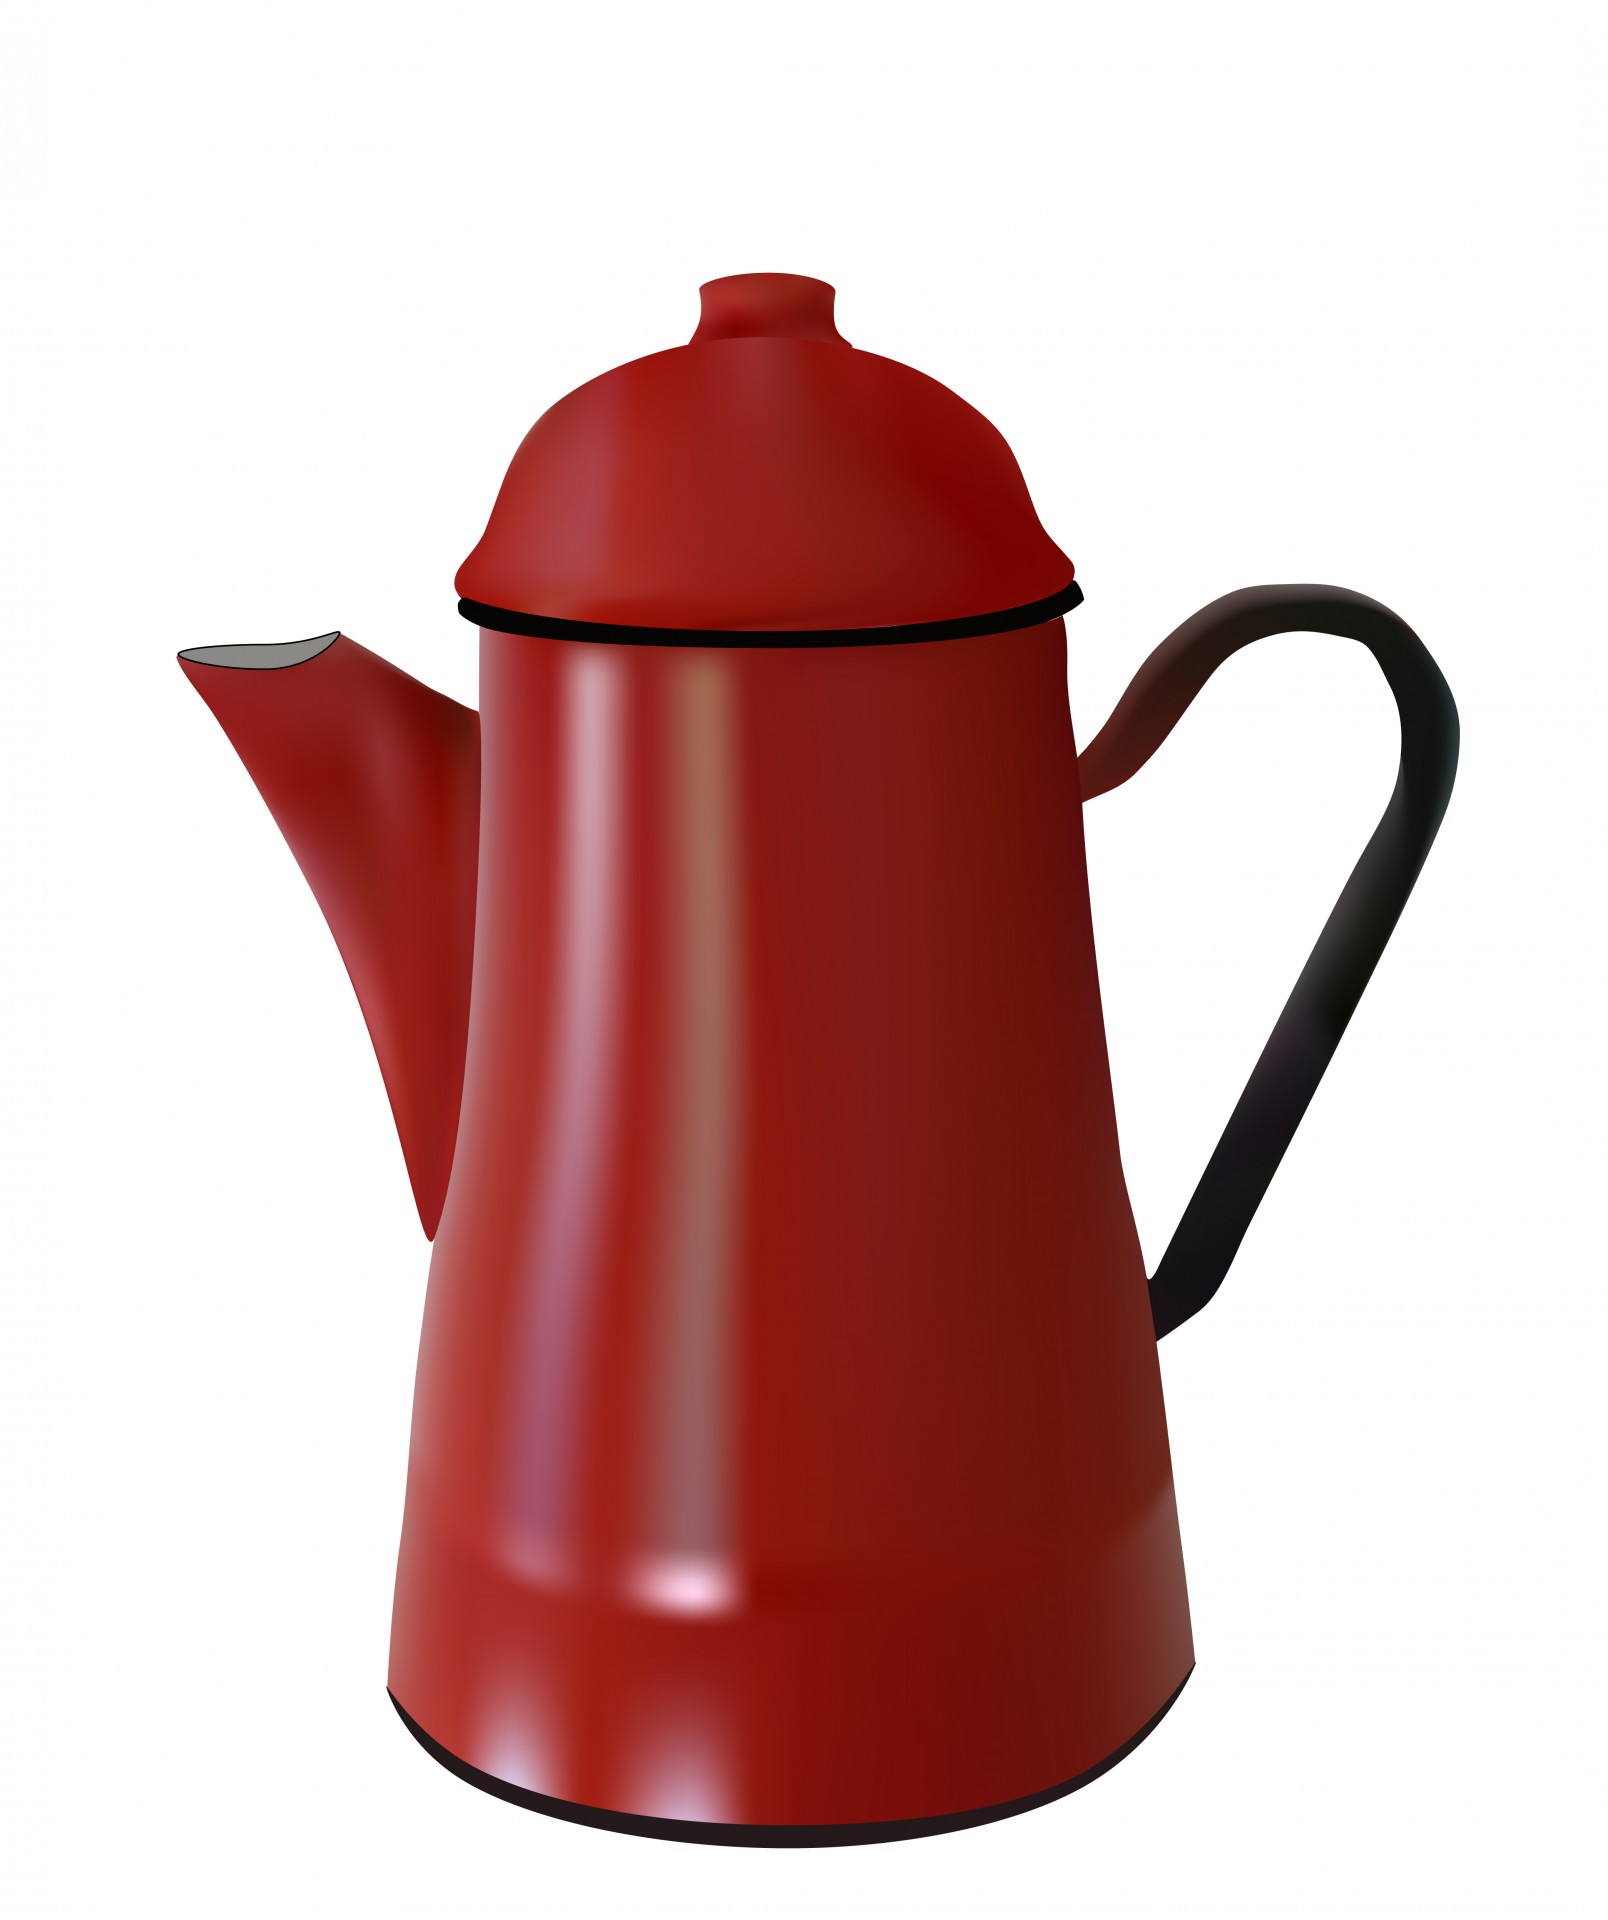 Coffee Pot Clipart.